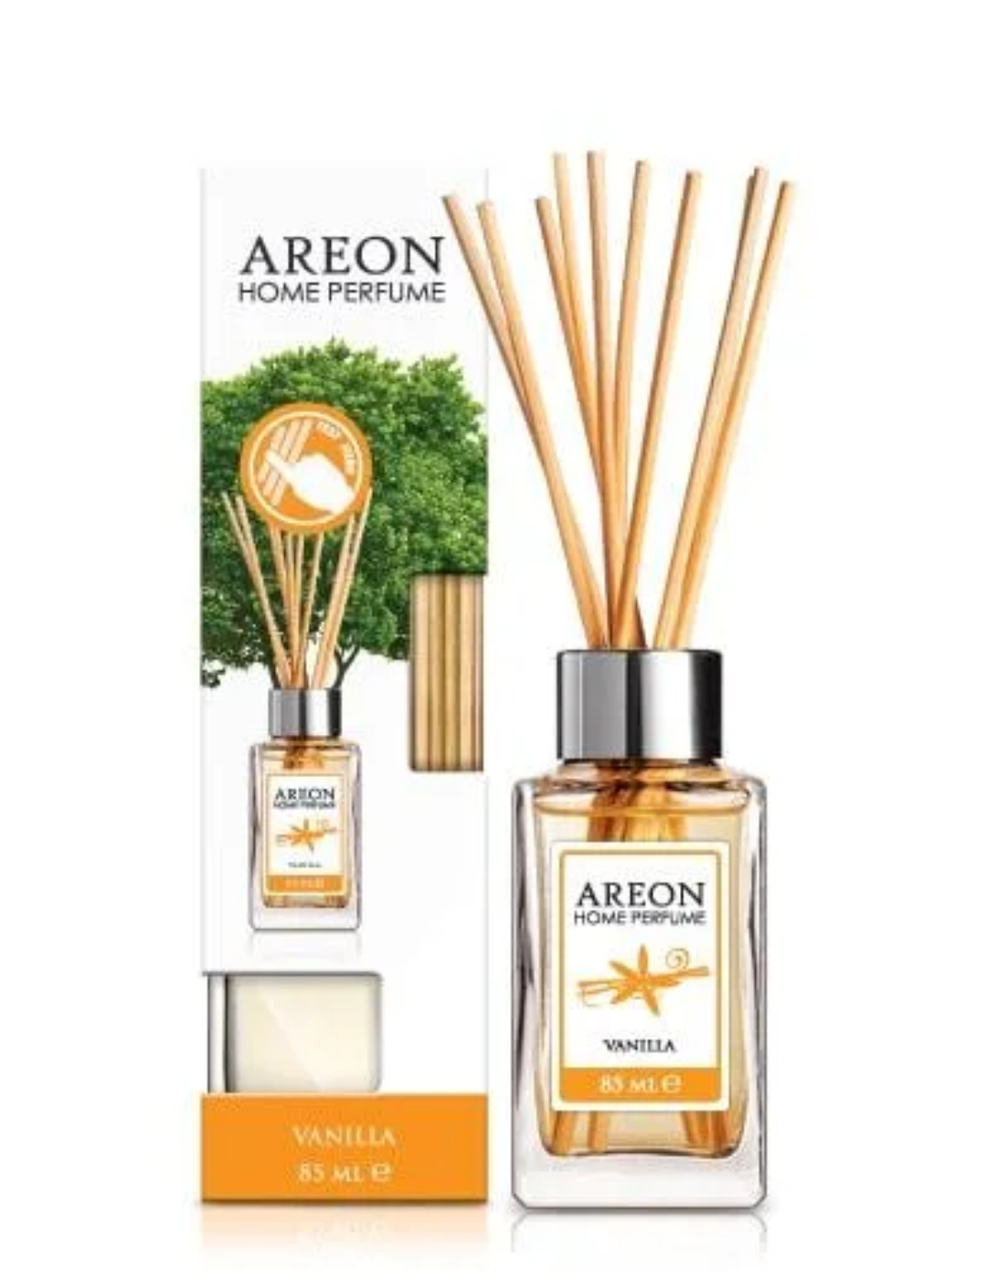 Ароматизатор Areon Home Perfume Vanilla 85ml ваниль